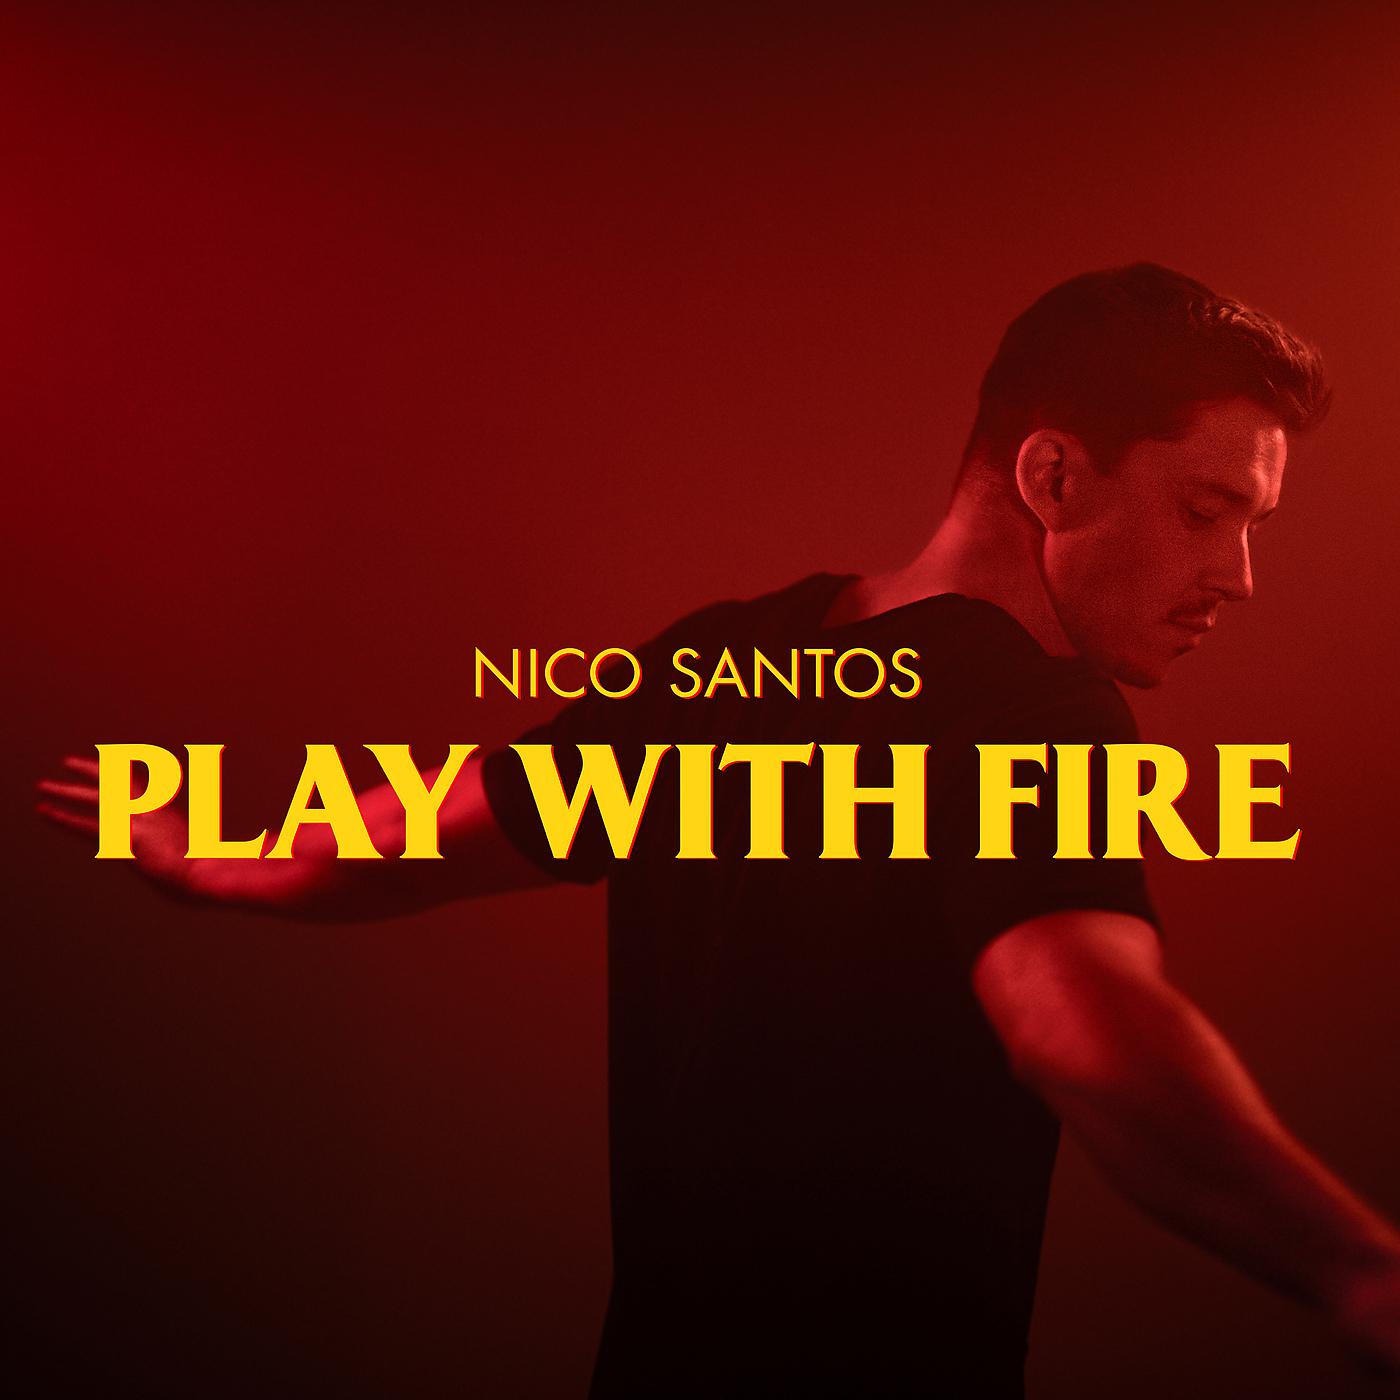 Play with fire на русском. Nico Santos Play with Fire. Play with Fire Sam Tinnesz. Play with Fire Sam Tinnesz feat Yacht money. Nico Santos обложка.